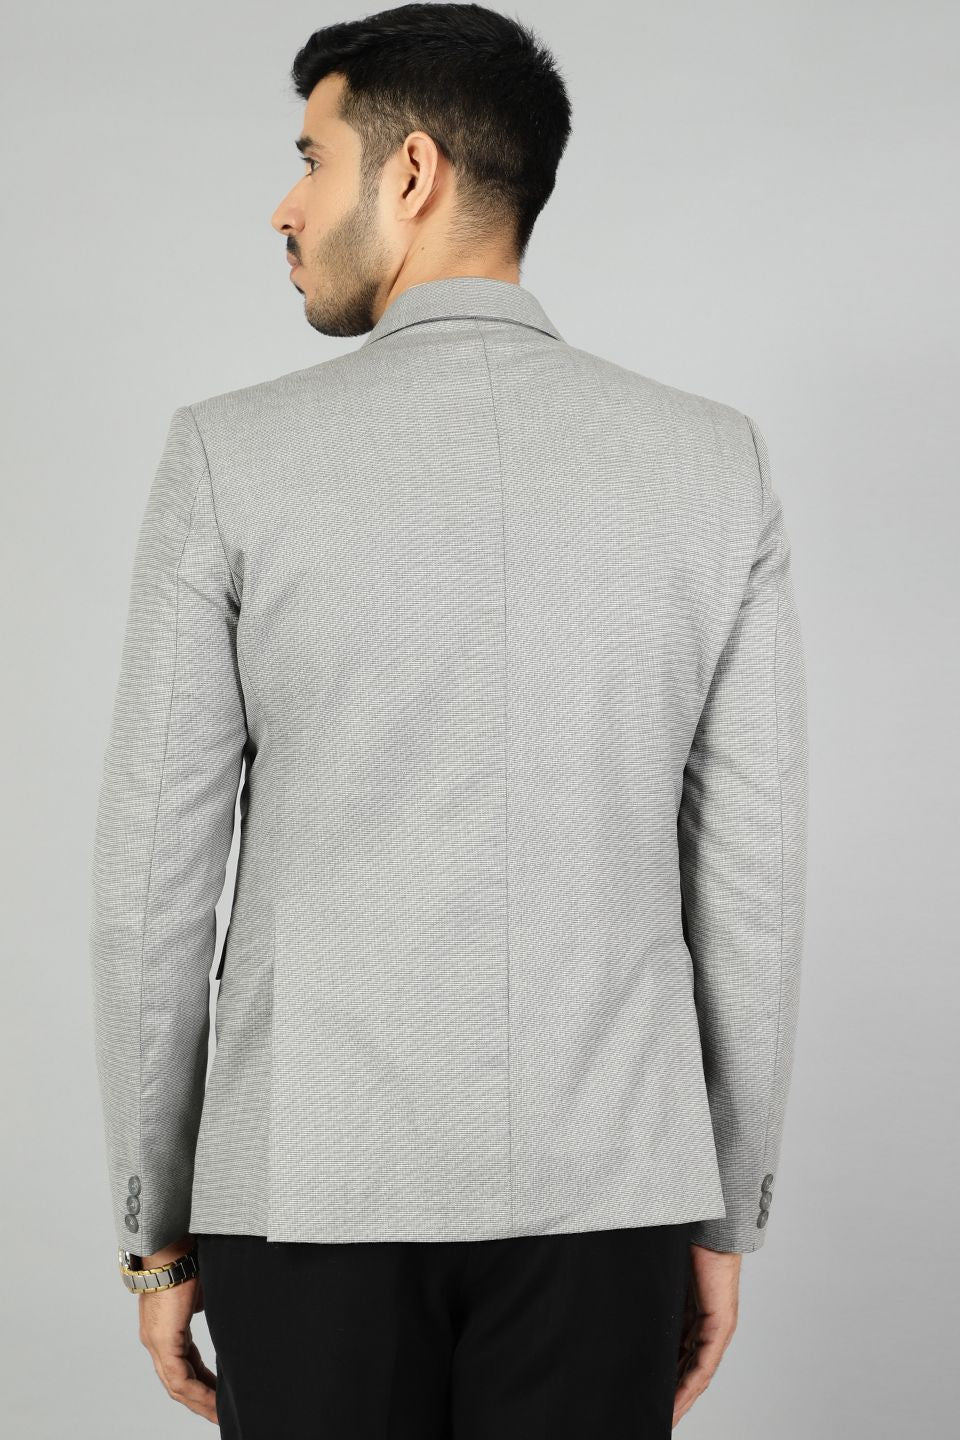 Polyester Cotton Plain Grey Blazer